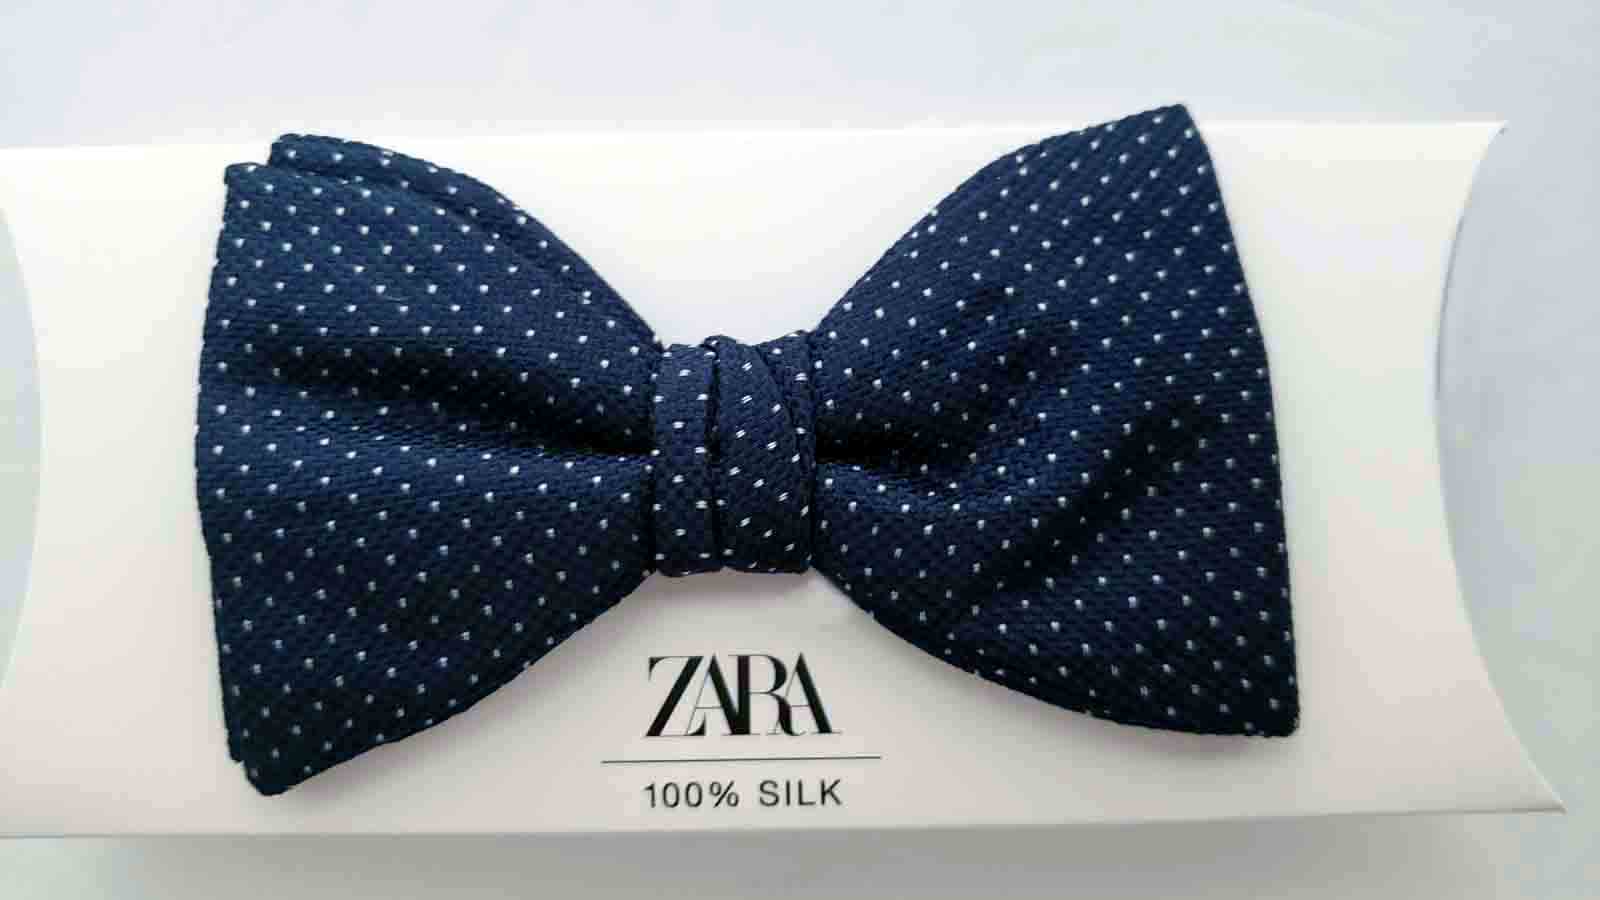 Zara Silk Bow Tie Navy Blue White Polka Dots Pre-Tied Men's